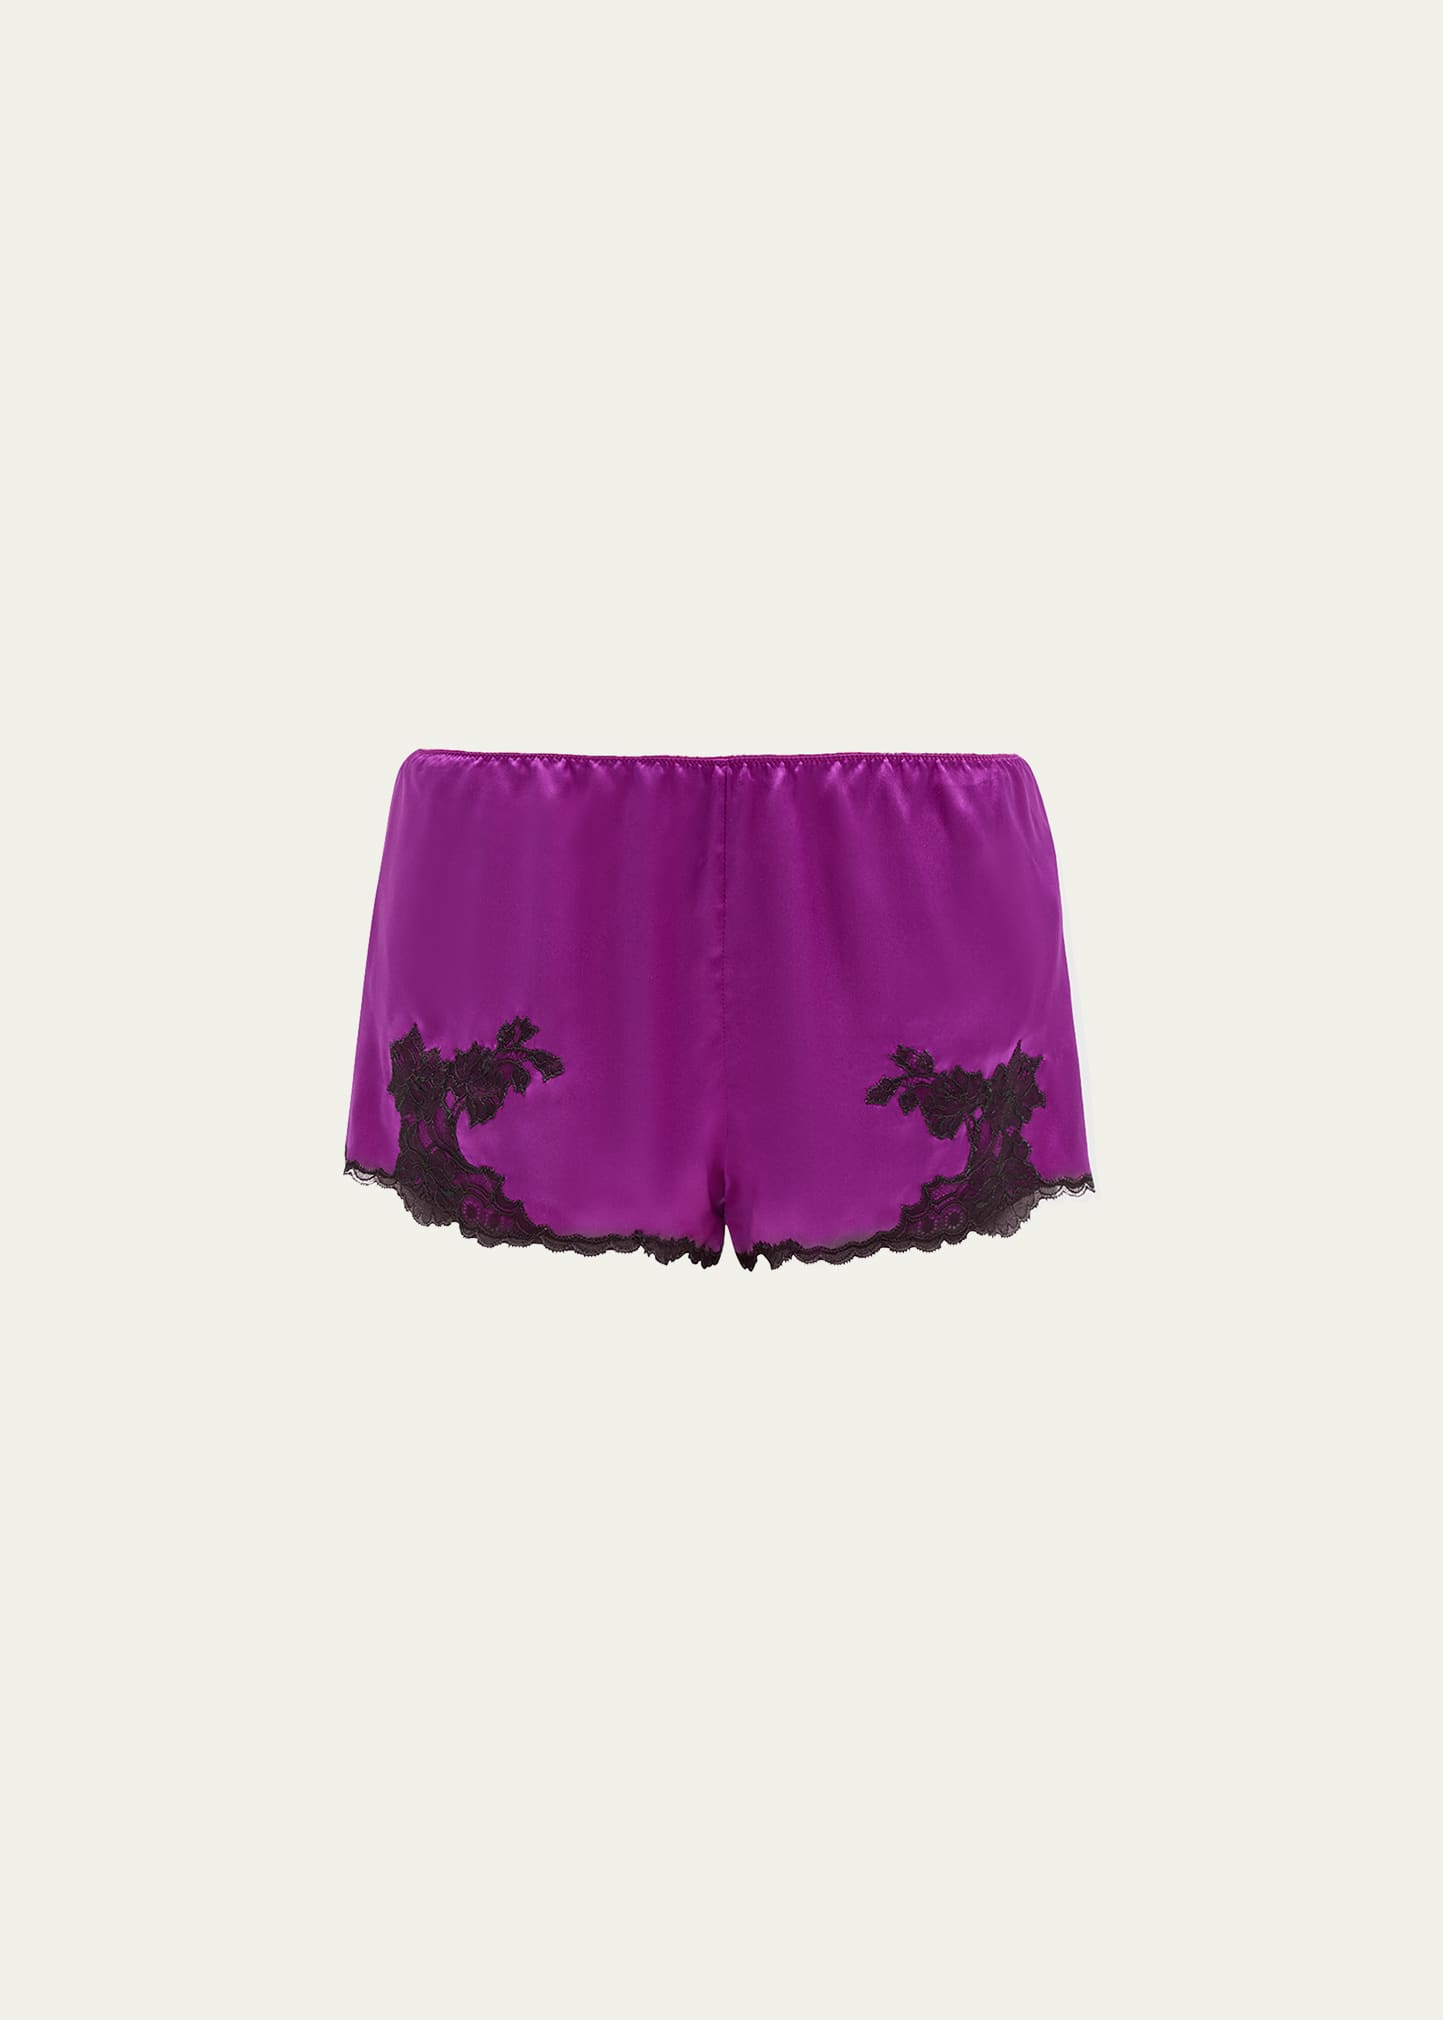 Josie Natori Lolita Lace-Trim Silk Shorts